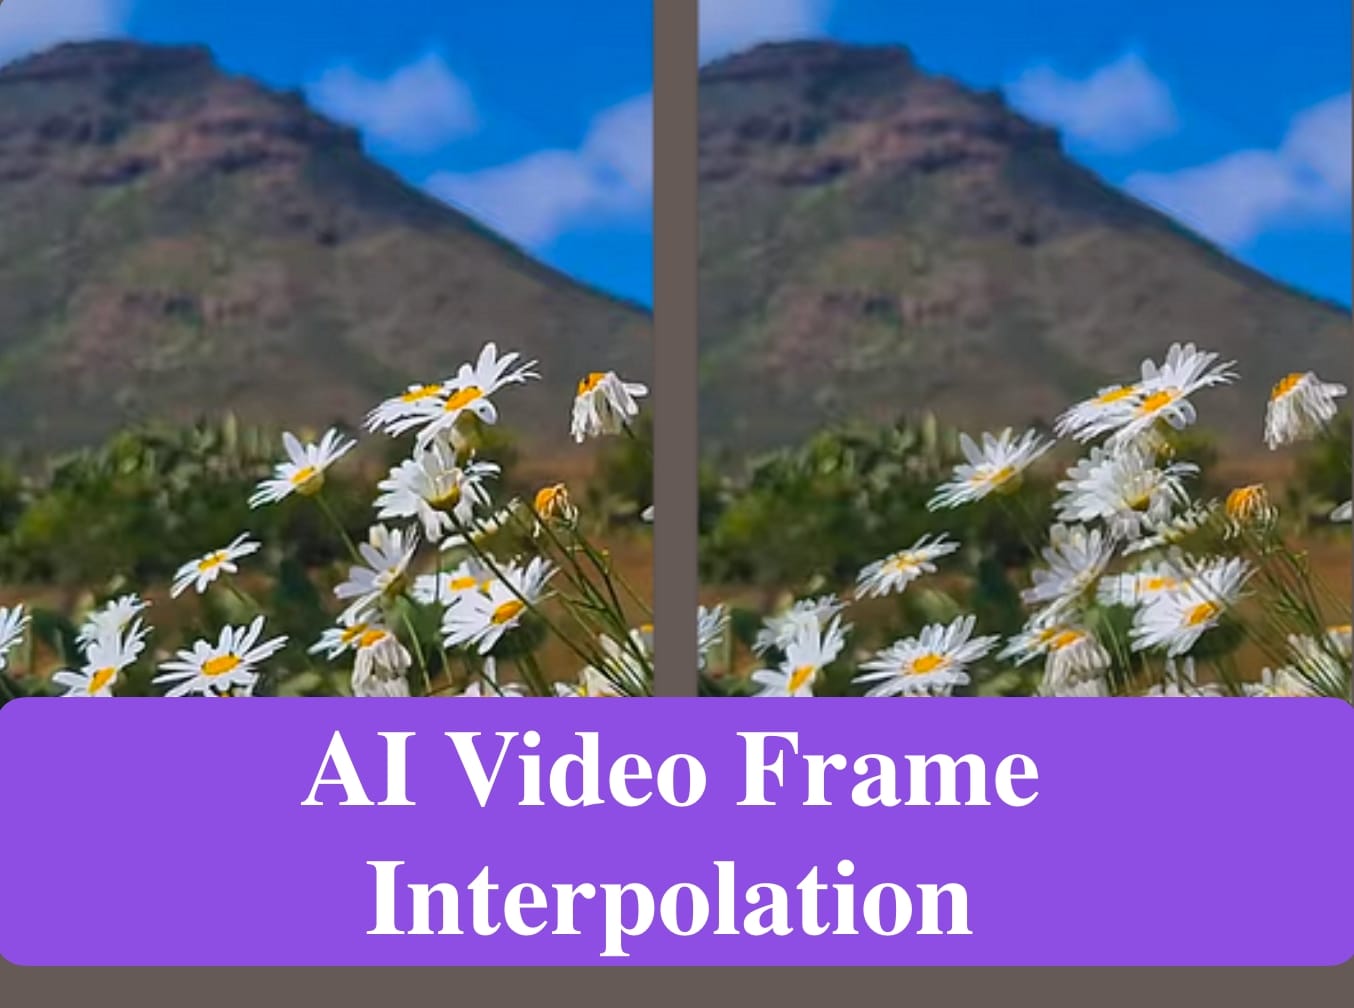 AI Video Frame Interpolation Explained